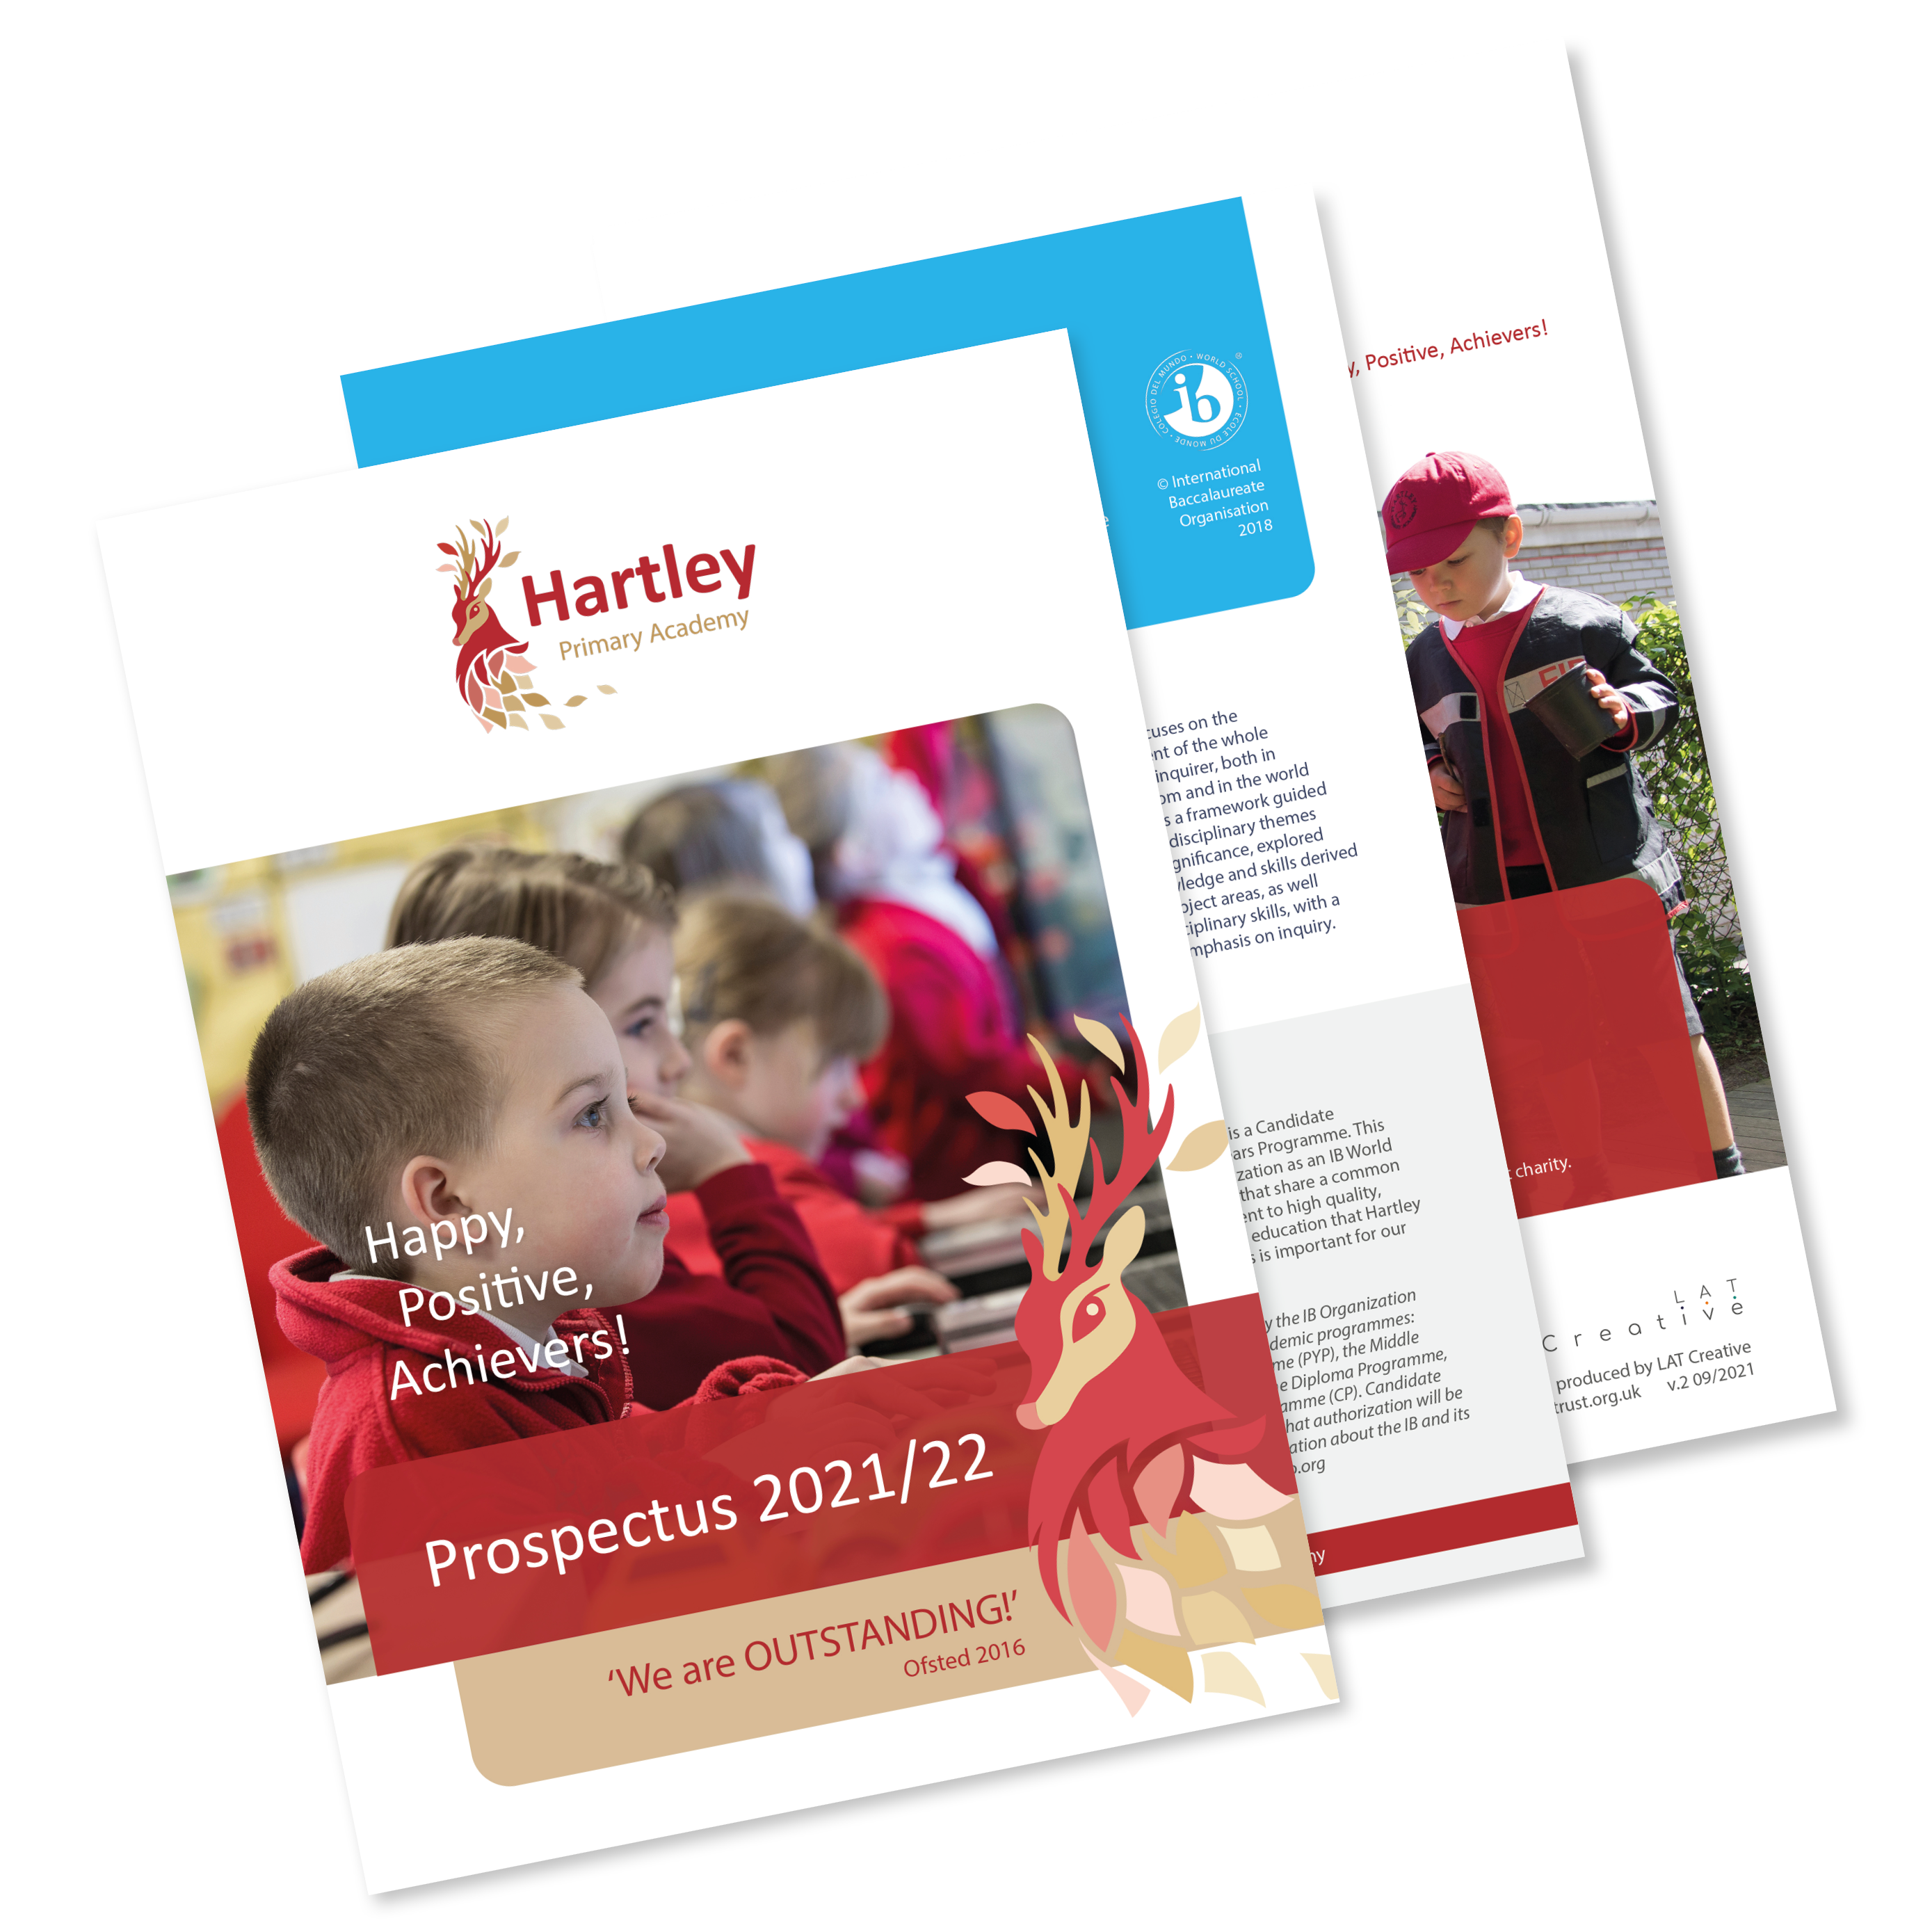 Hartley Primary Academy Prospectus 2021/22 Web Tile image.